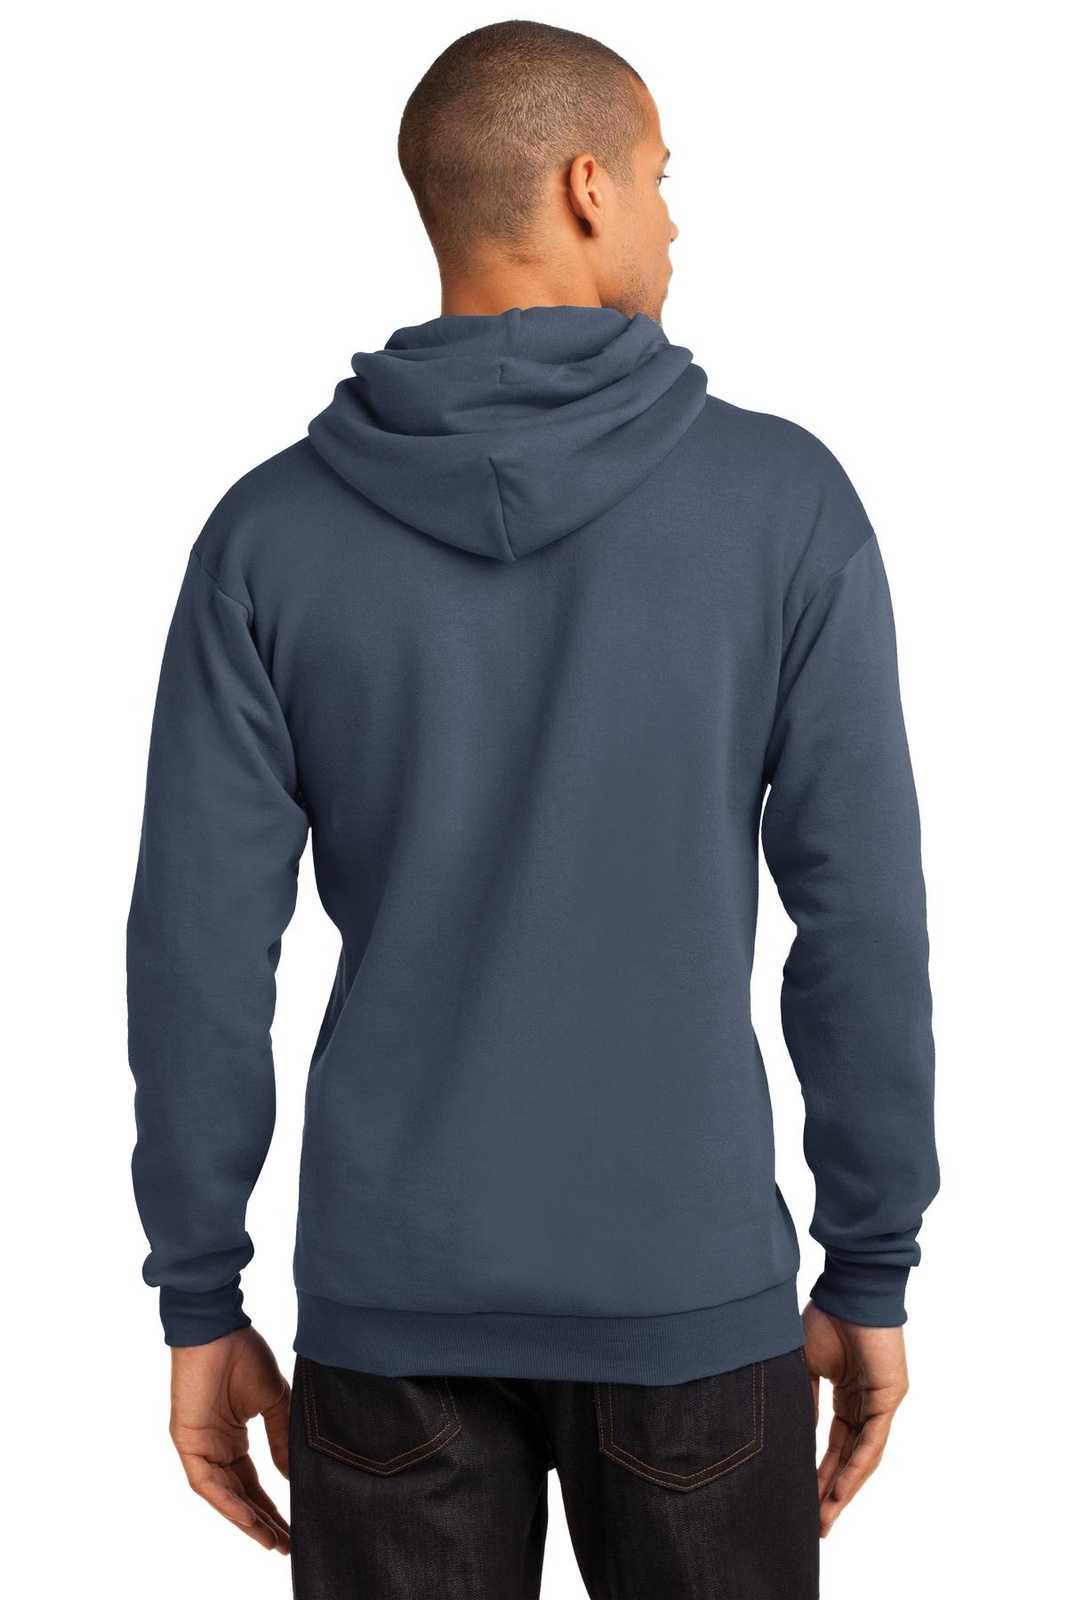 Port & Company PC78H Core Fleece Pullover Hooded Sweatshirt - Steel Blue - HIT a Double - 1